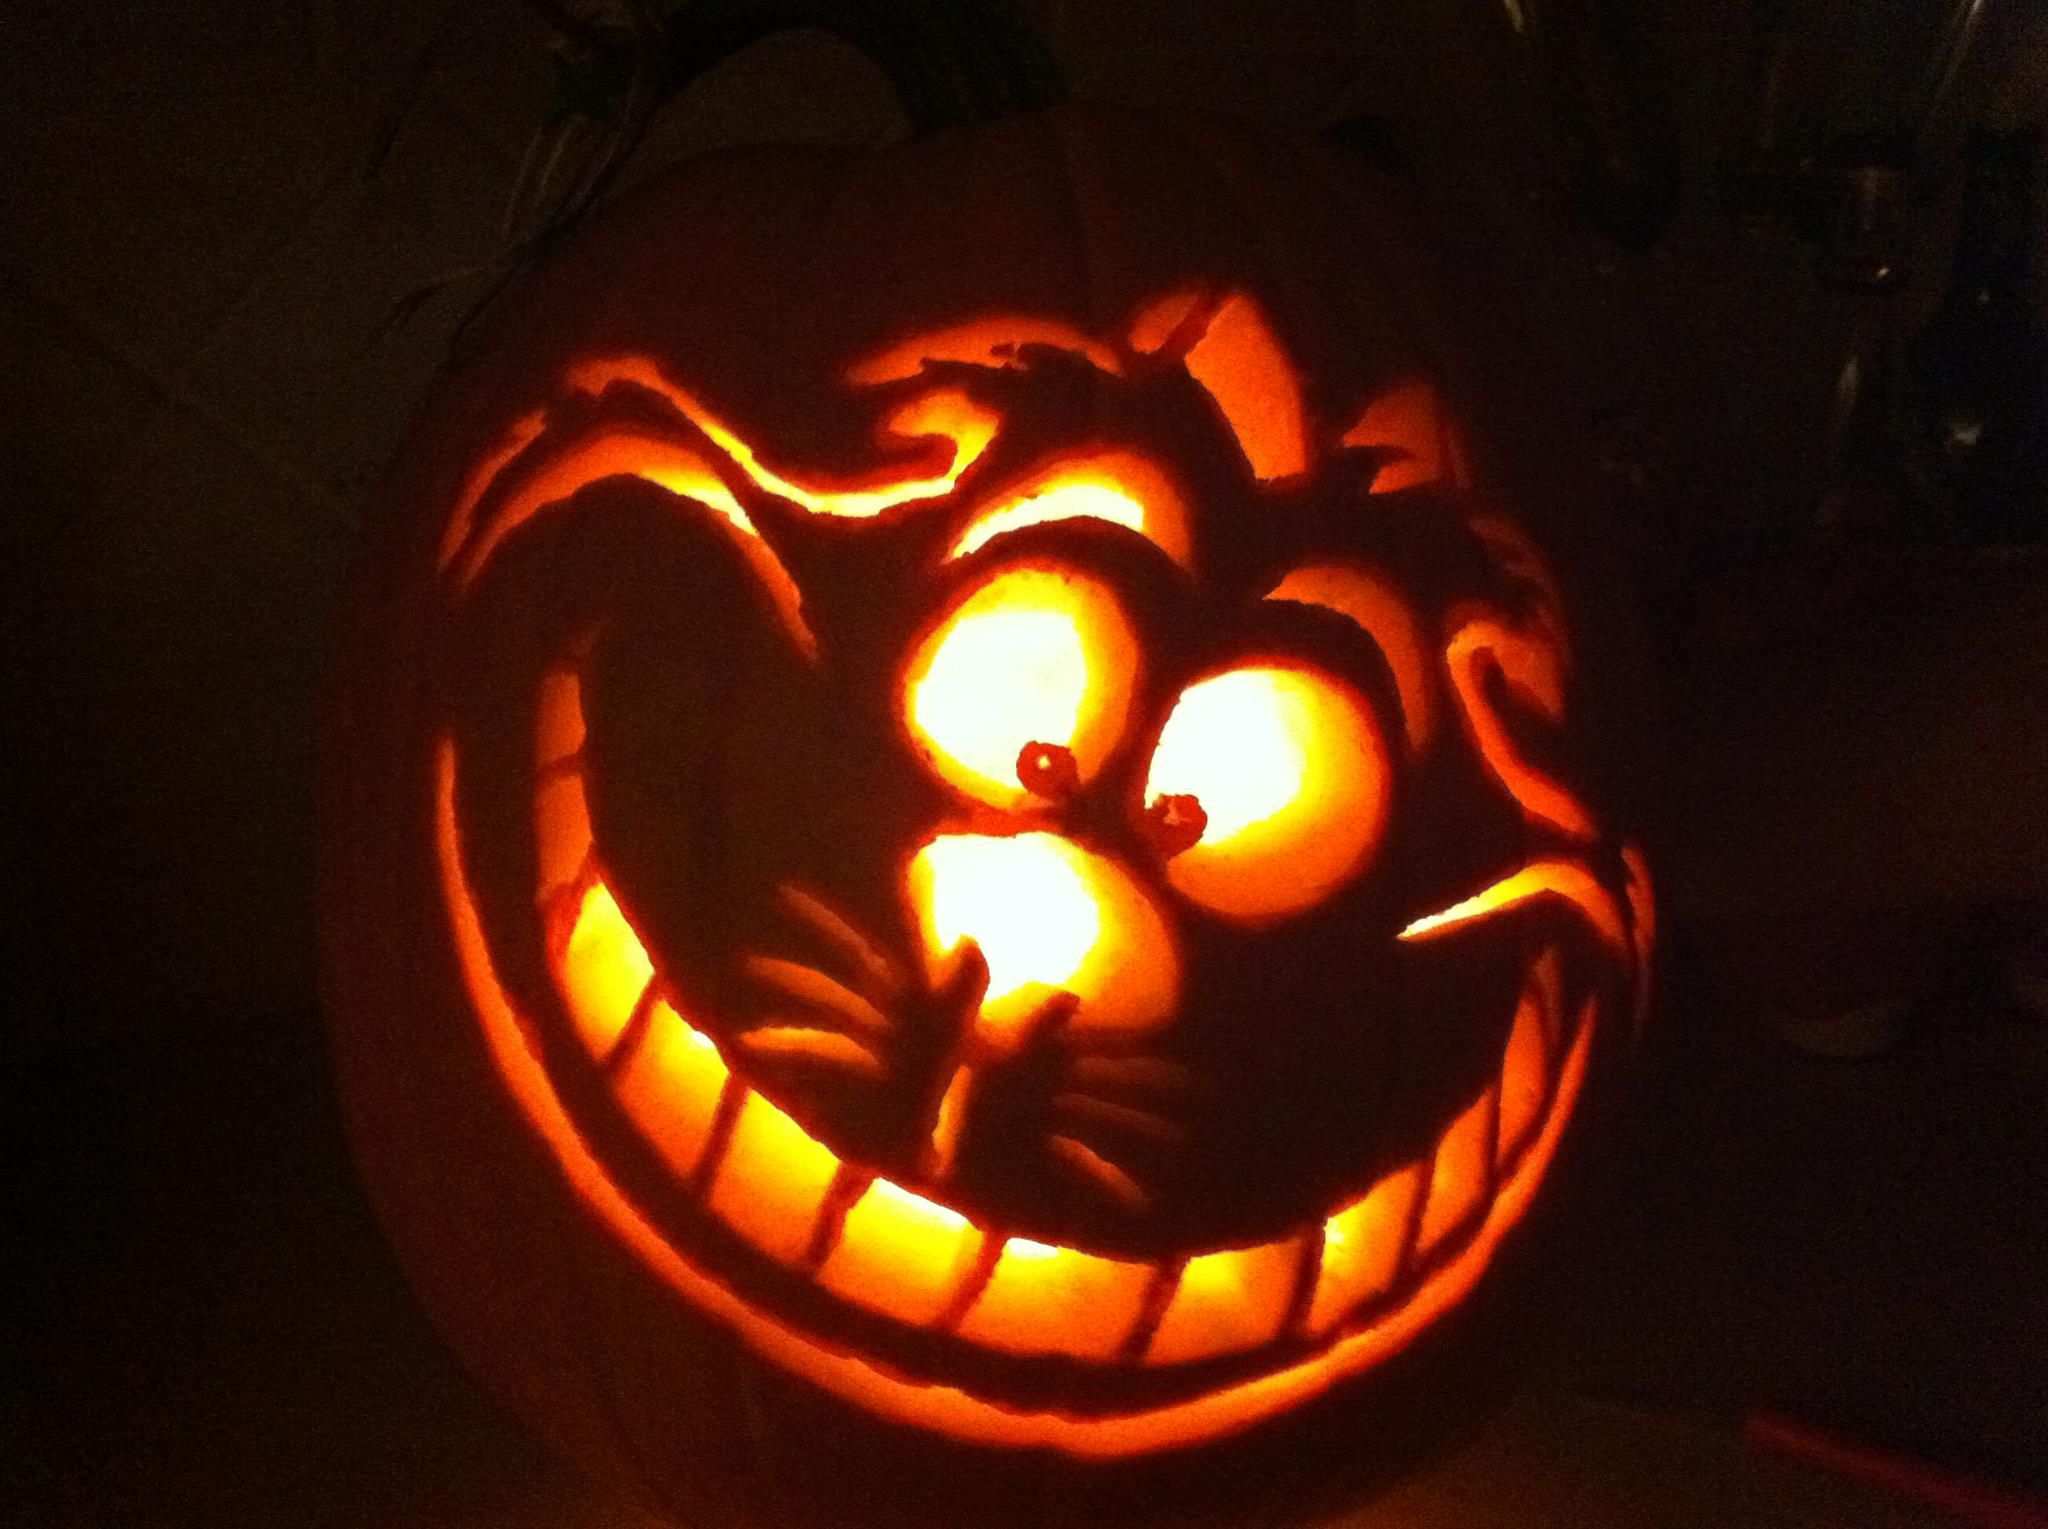 Cheshire Cat So Much Fun Carving This Pumpkin Halloween Kurbis Schnitzvorlagen Kurbisschnitzereien Kurbis Schnitzen Motive